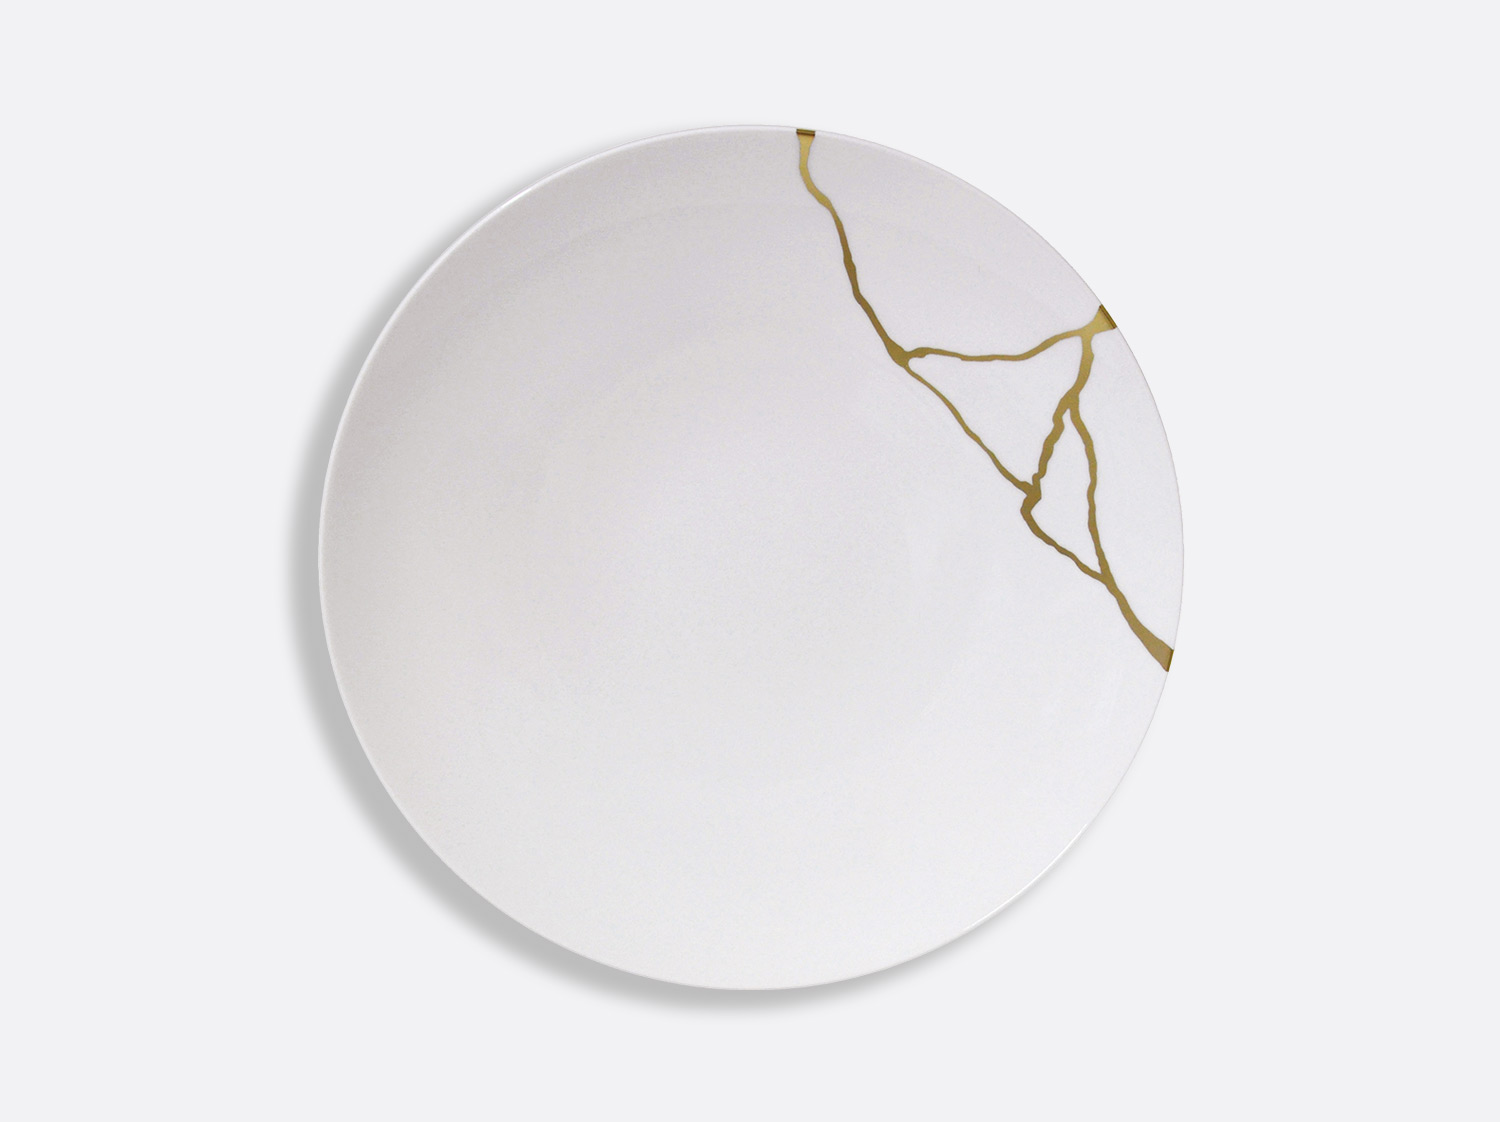 China Coupe dinner plate 27 cm of the collection Kintsugi | Bernardaud